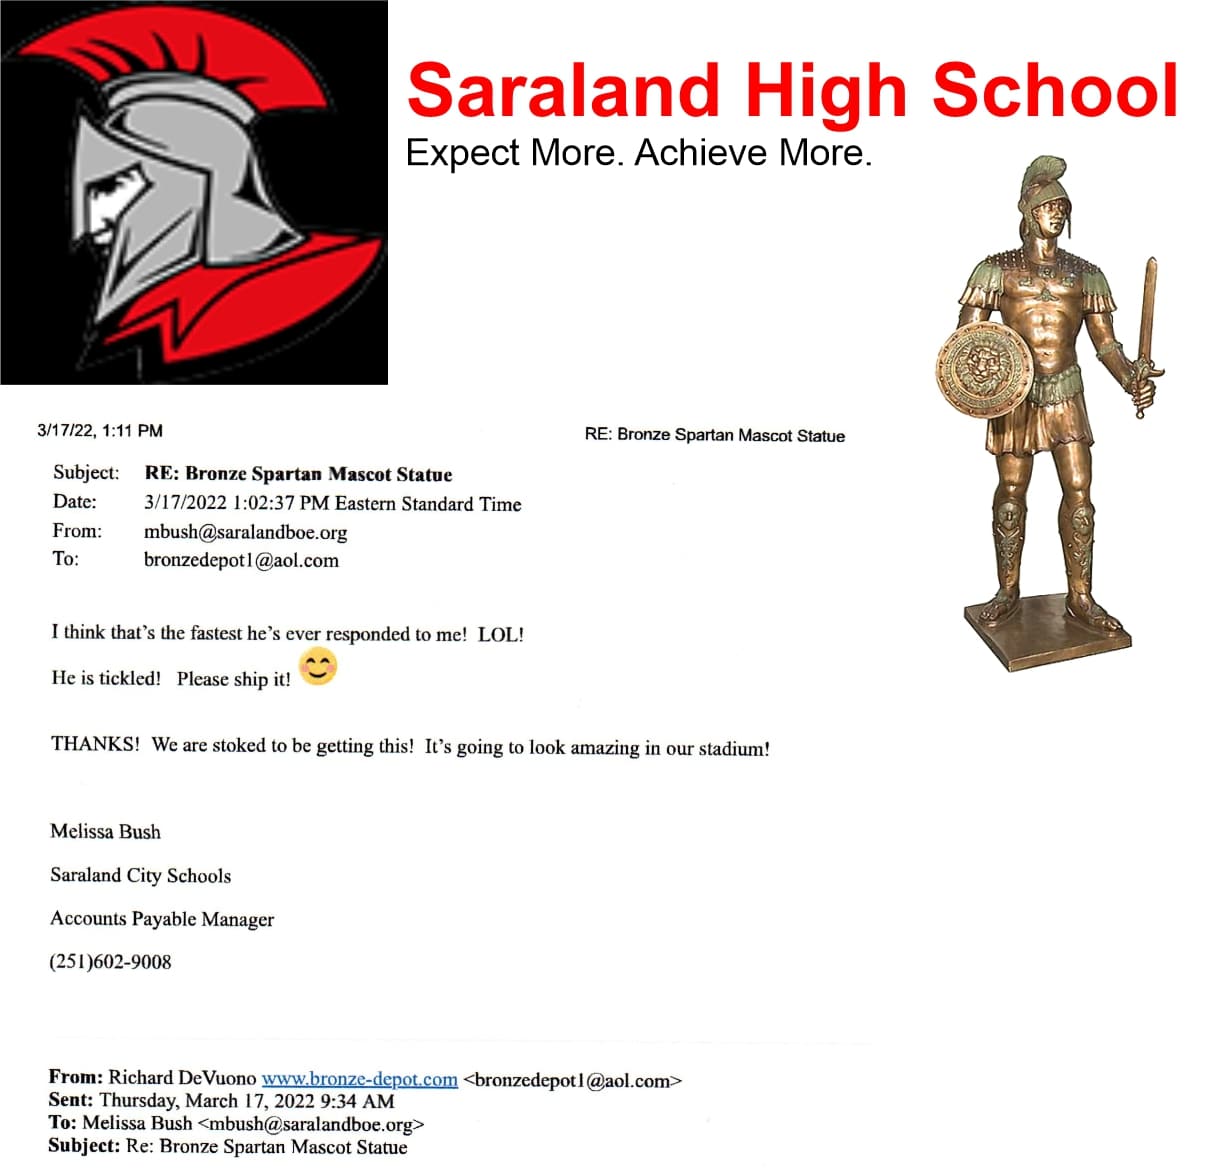 SARALAND HIGH SCHOOL